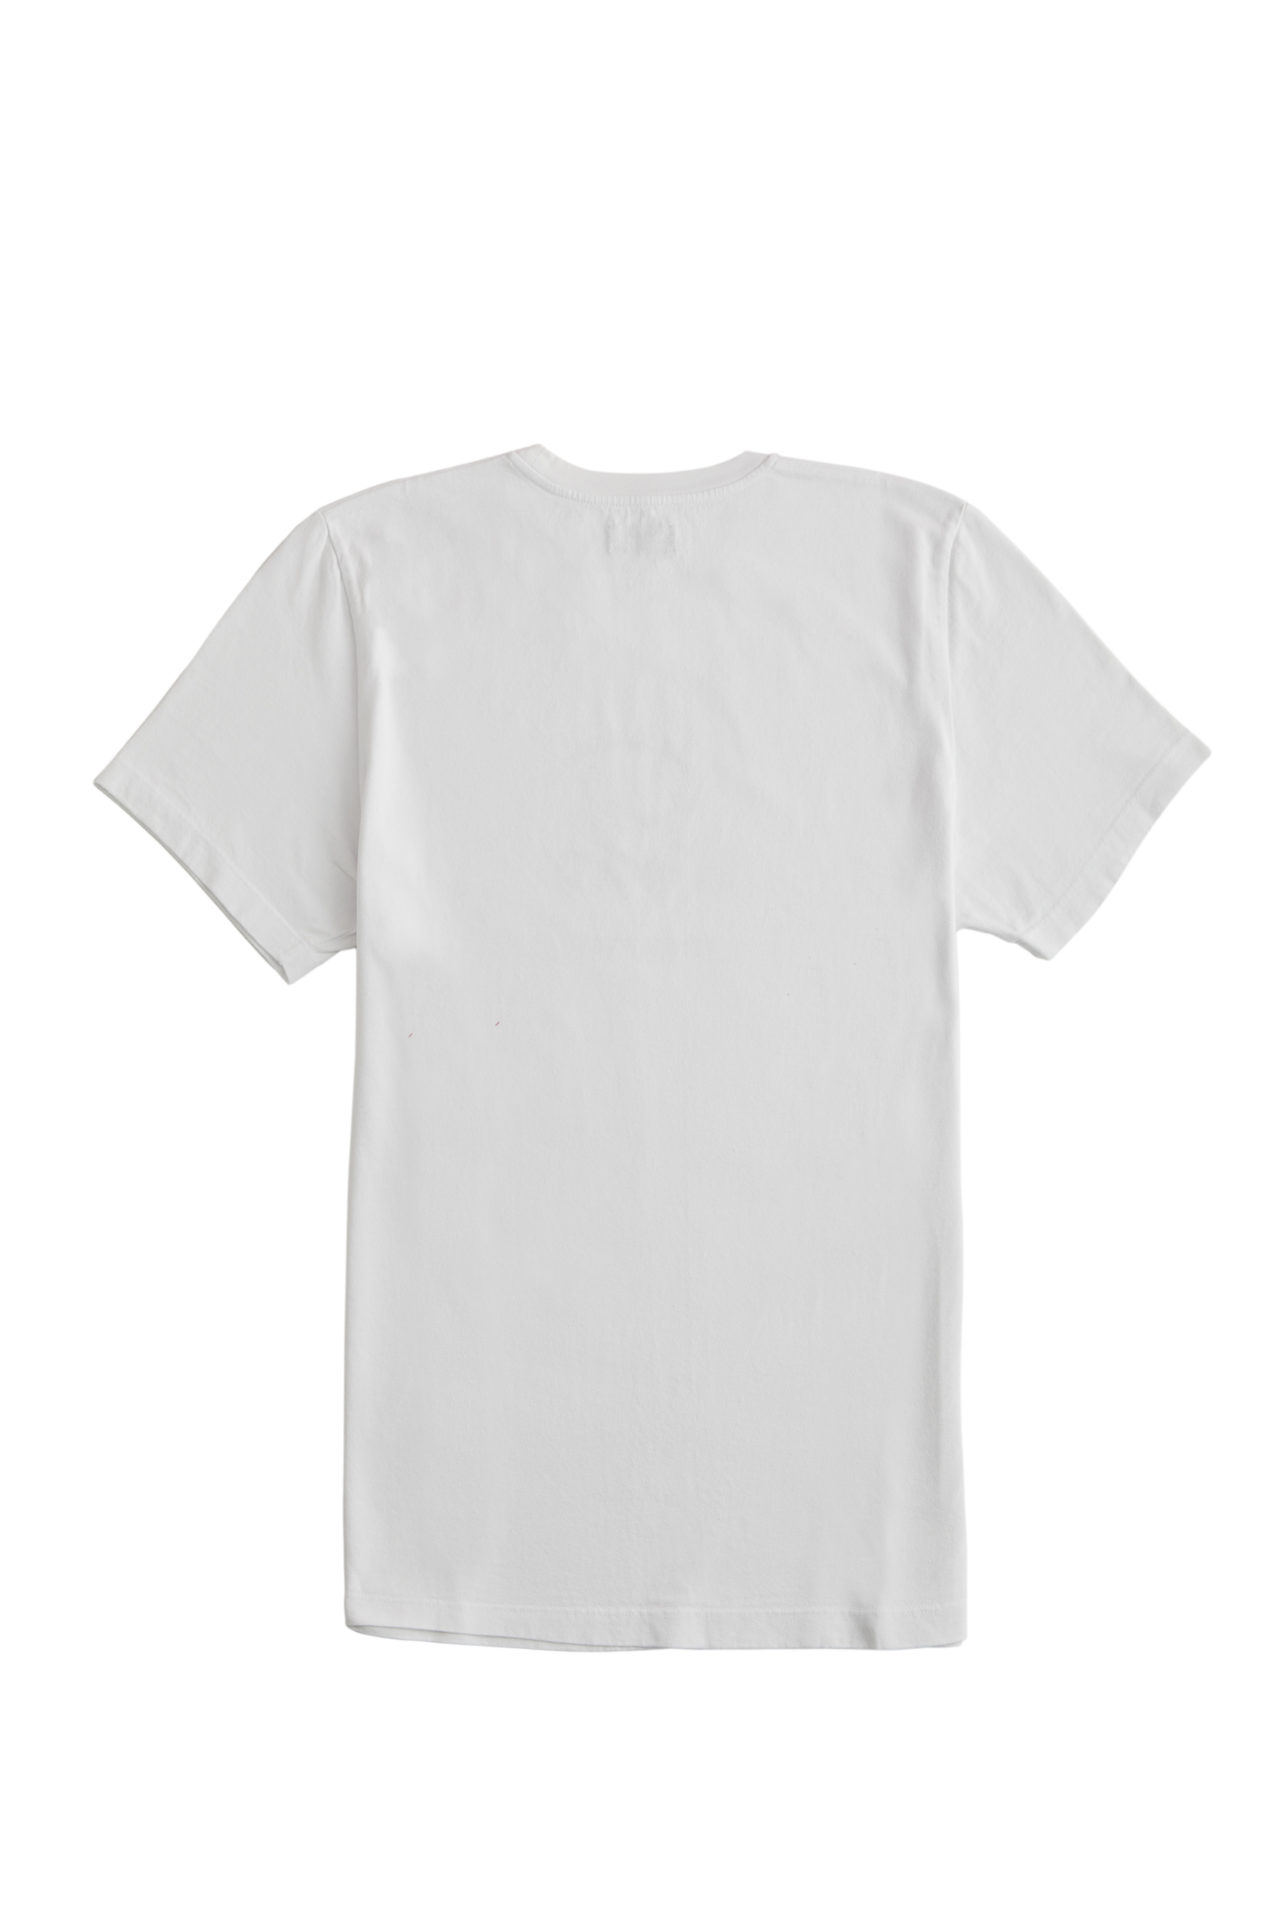 Burma uld Sanders Plain White Raw Cotton T-Shirt - Barbanera